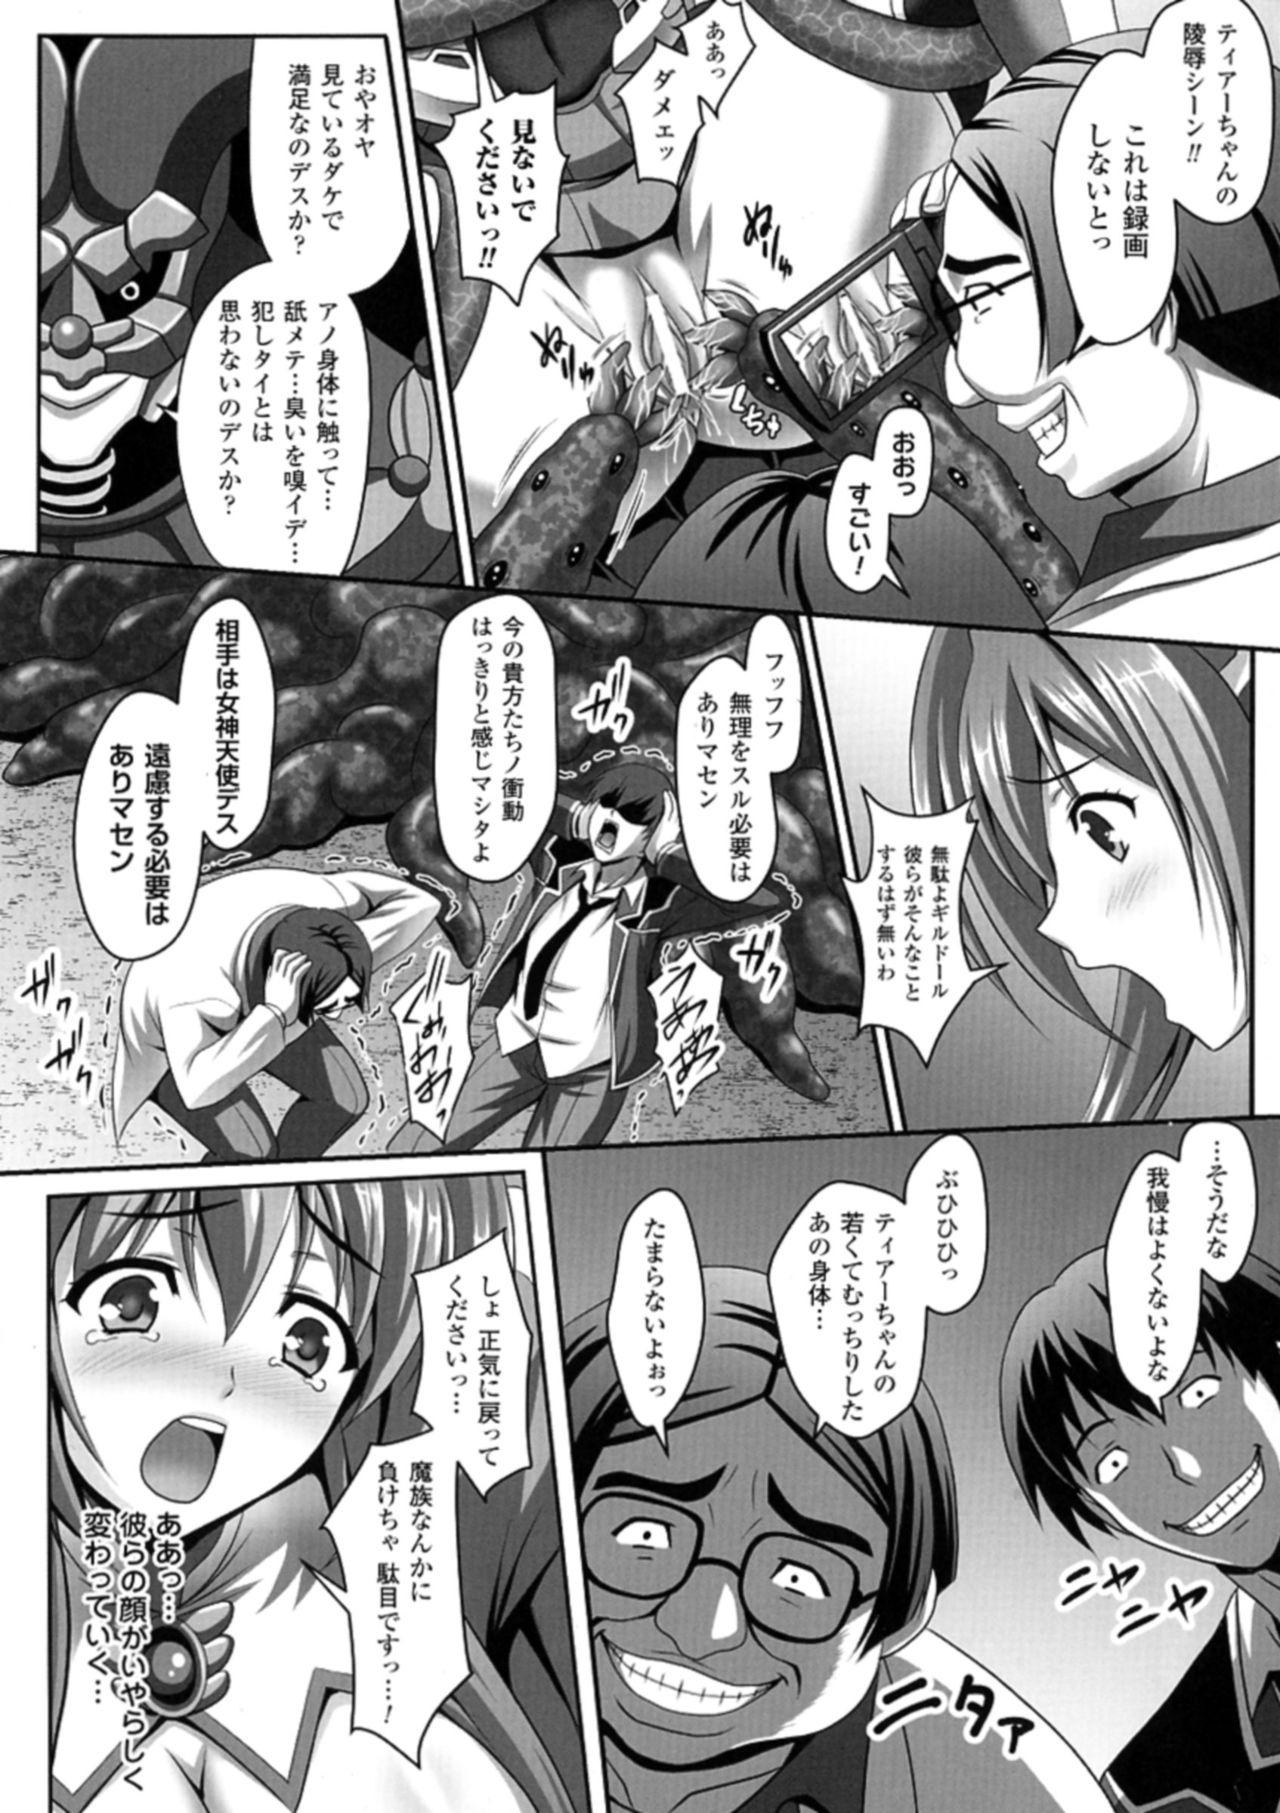 Seigi no Heroine Kangoku File DX Vol. 3 7